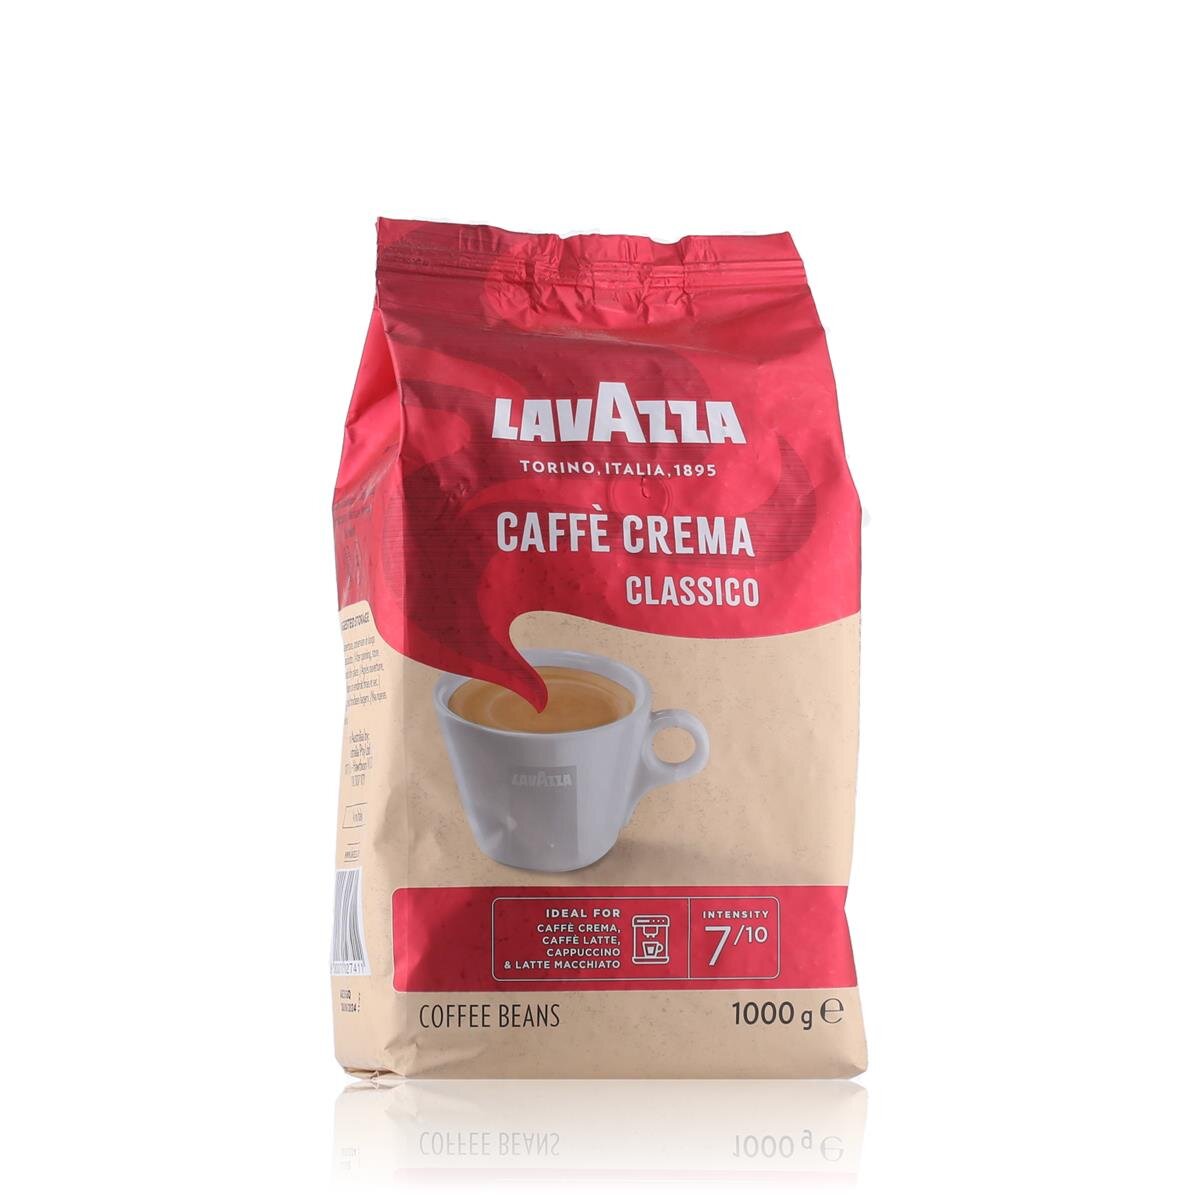 Lavazza Caffè Crema Classico ganze Bohnen 7/10 € 12,99 Kaffee 1kg